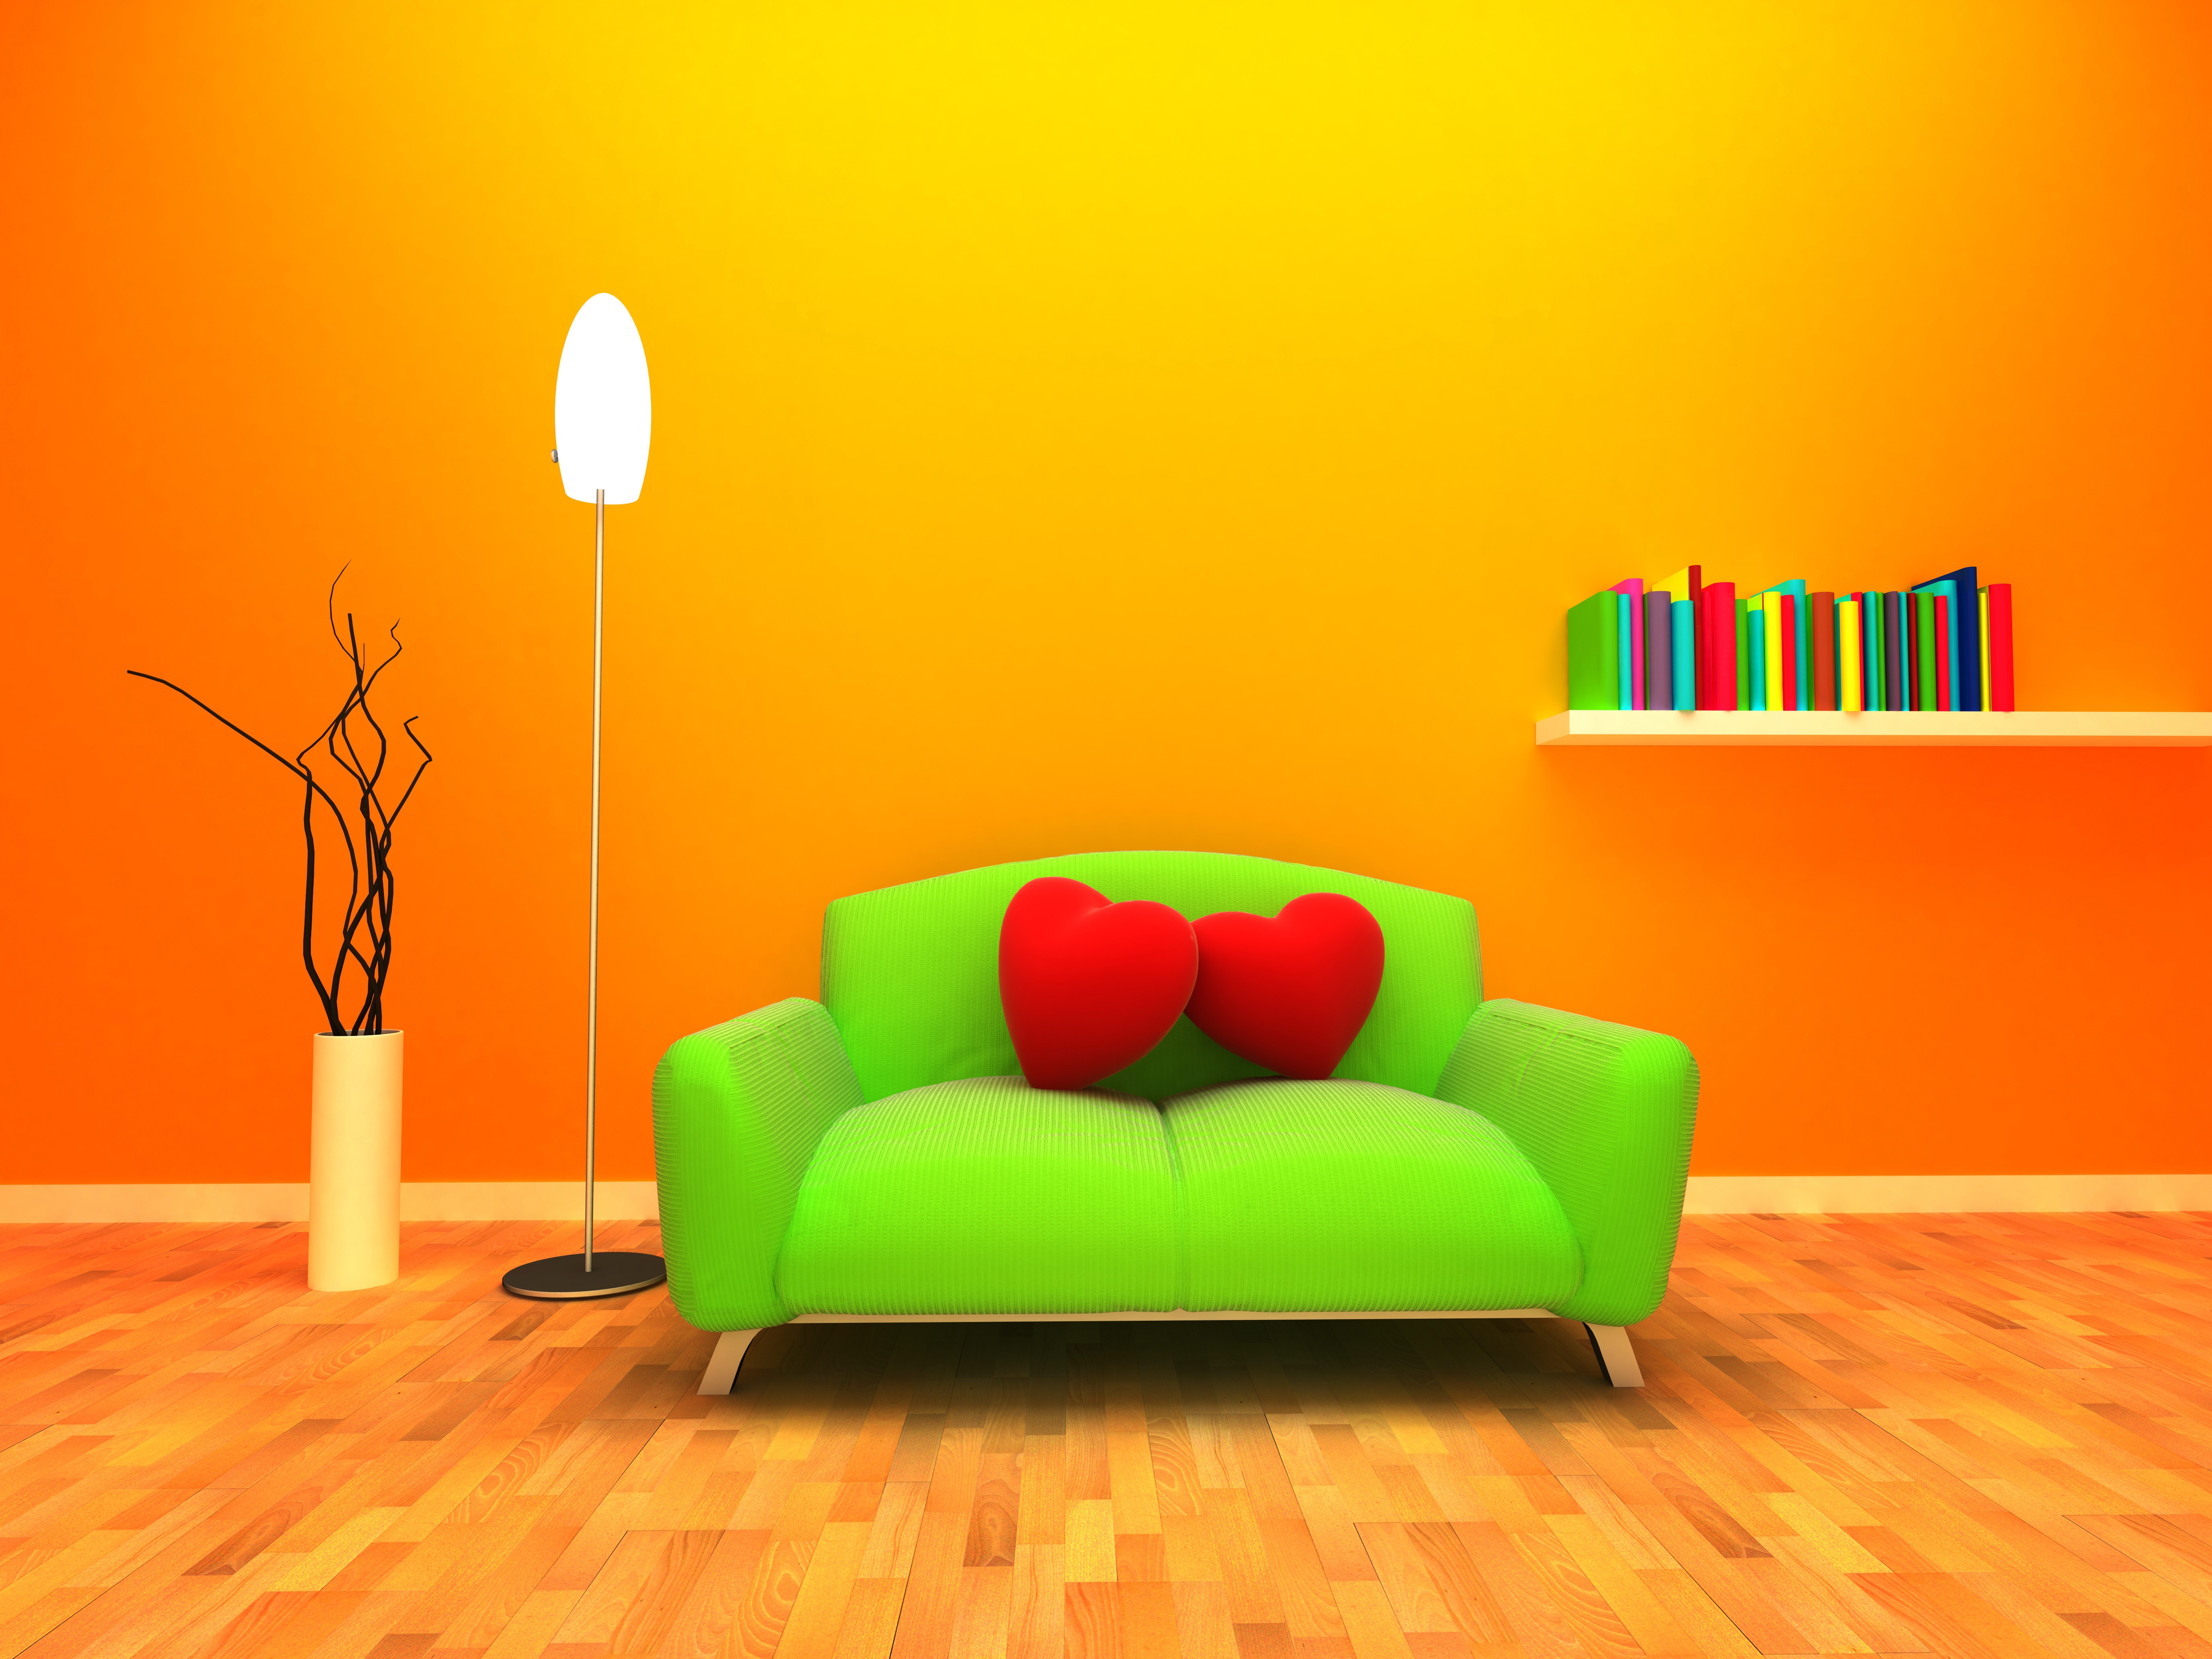 67486 Bild herunterladen herzen, verschiedenes, sonstige, zimmer, sofa, 3d-grafik, 3d-grafiken, orangefarbener hintergrund, orange hintergrund - Hintergrundbilder und Bildschirmschoner kostenlos